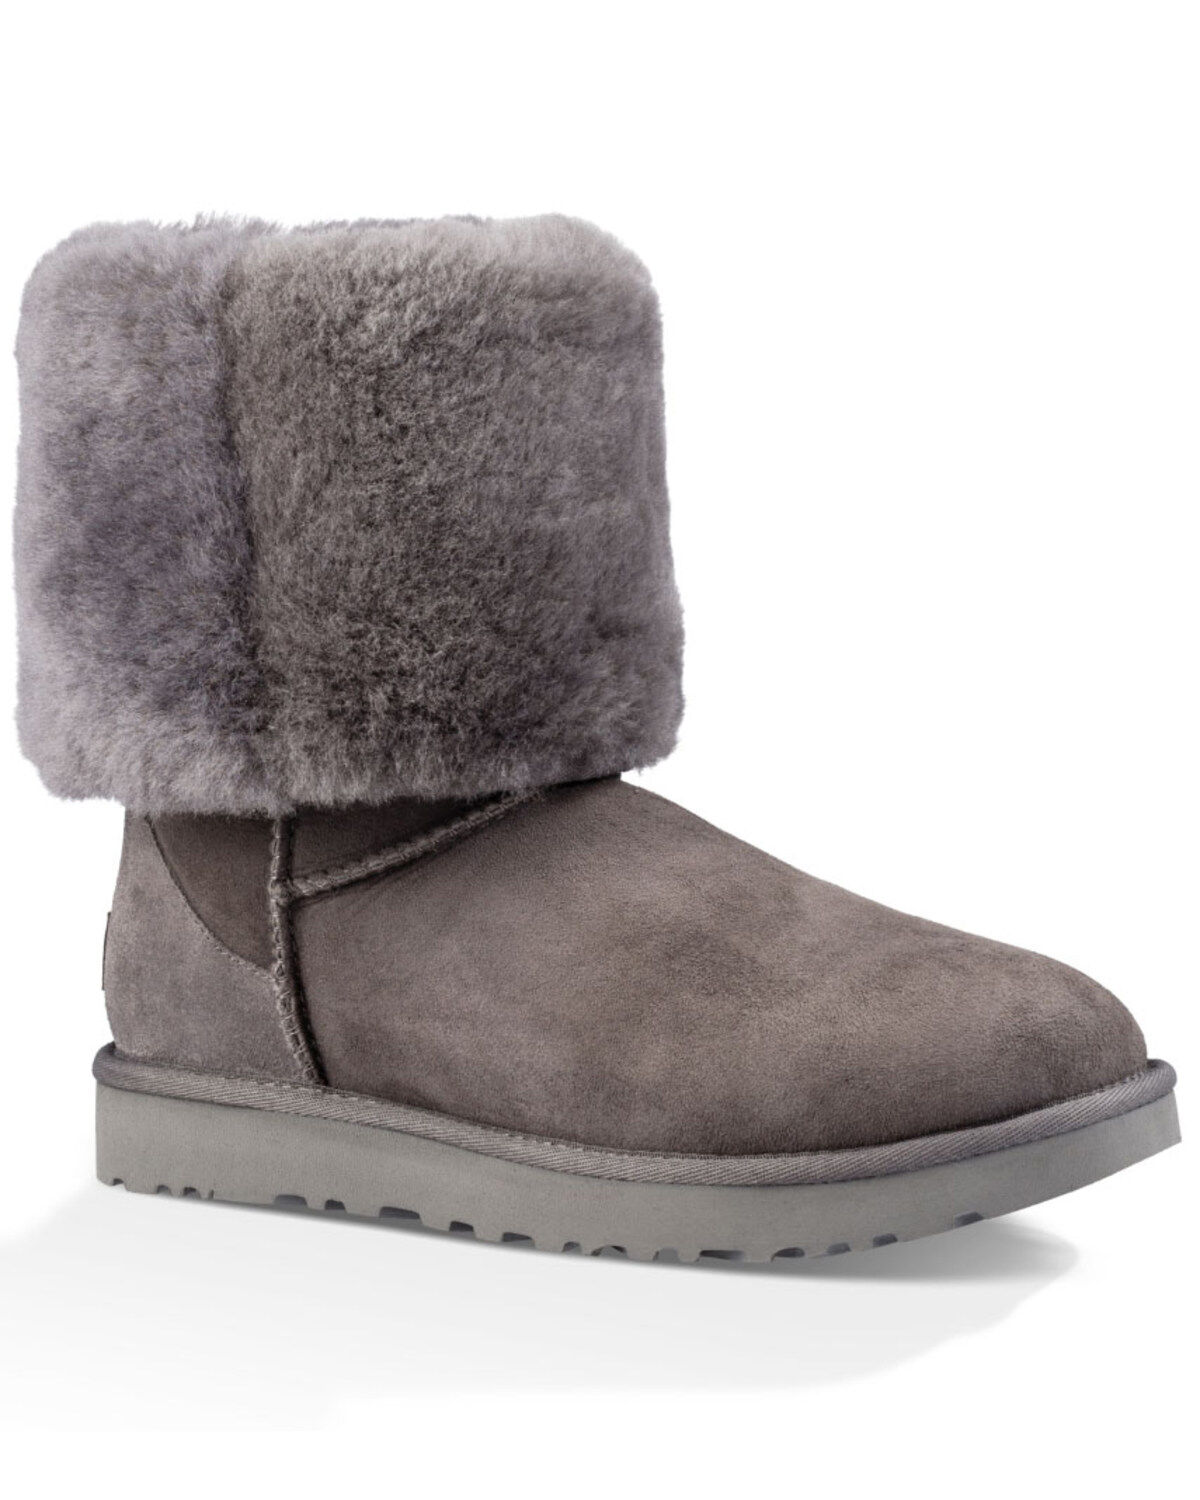 grey ugg snow boots